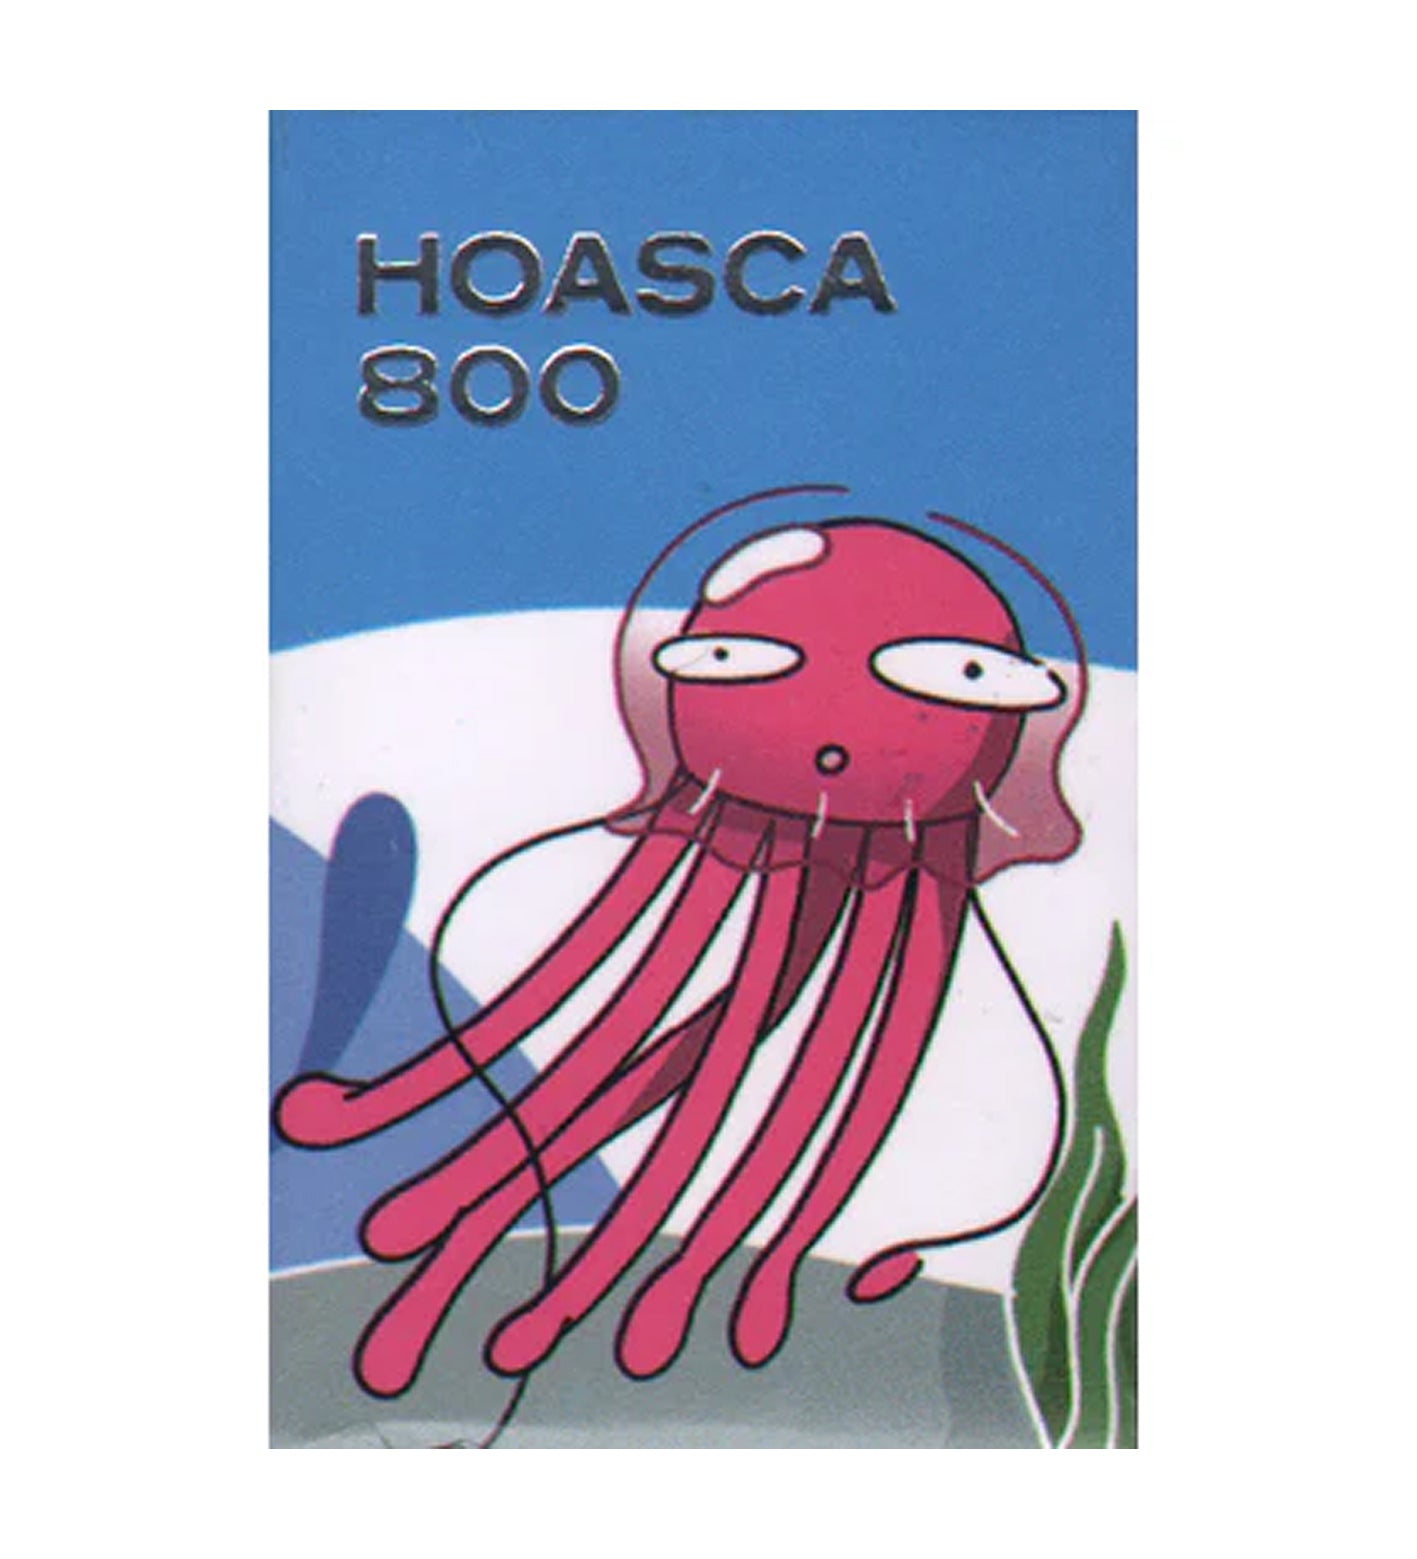 Hoasca 800 35mm Film 36 Exposures (£17.00 incl VAT)